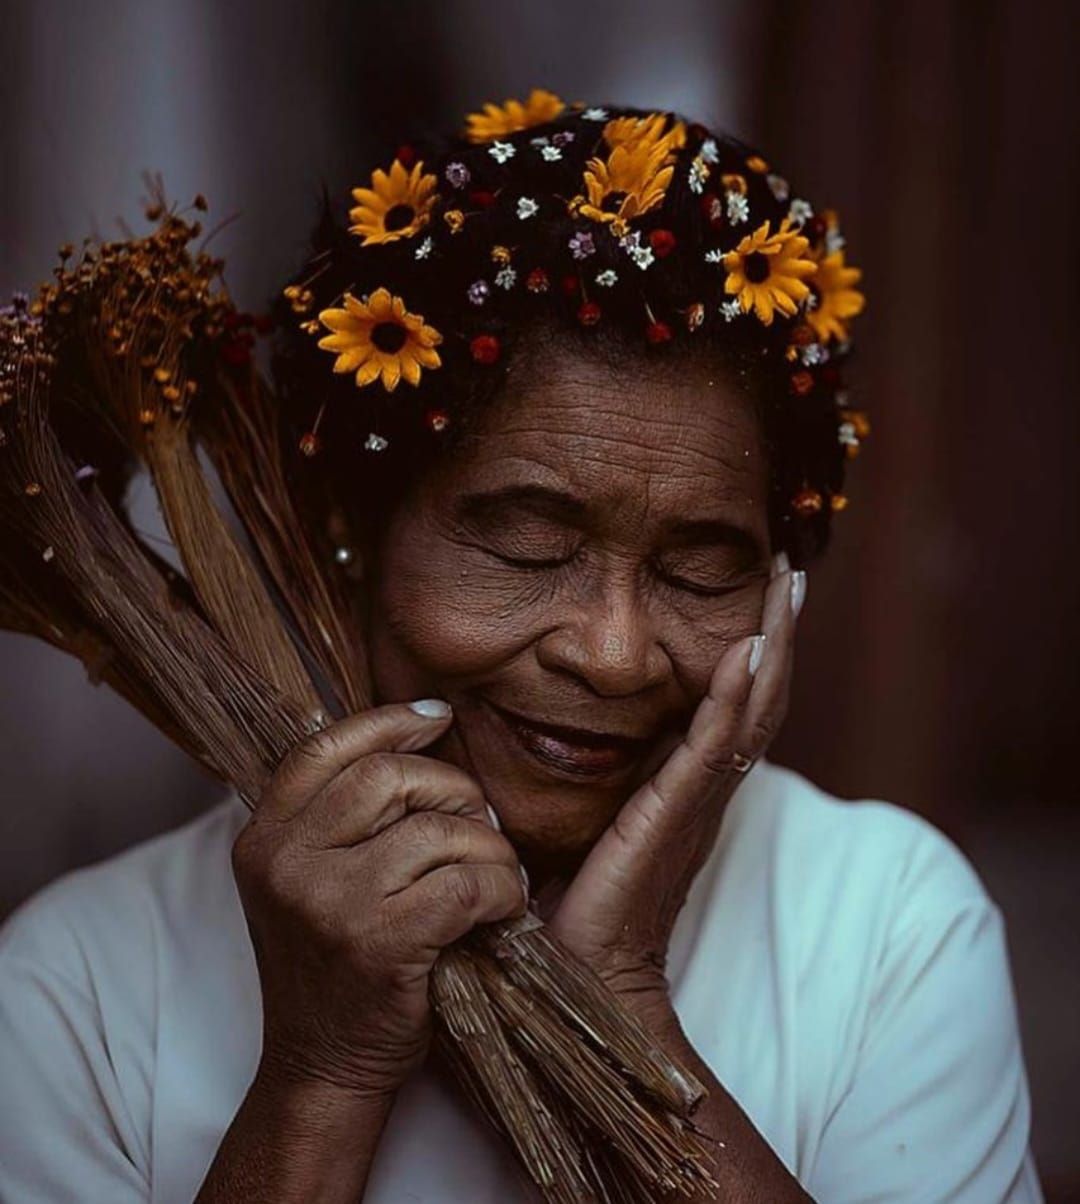 Projeto fotográfico destaca beleza dos moradores das favelas mineiras